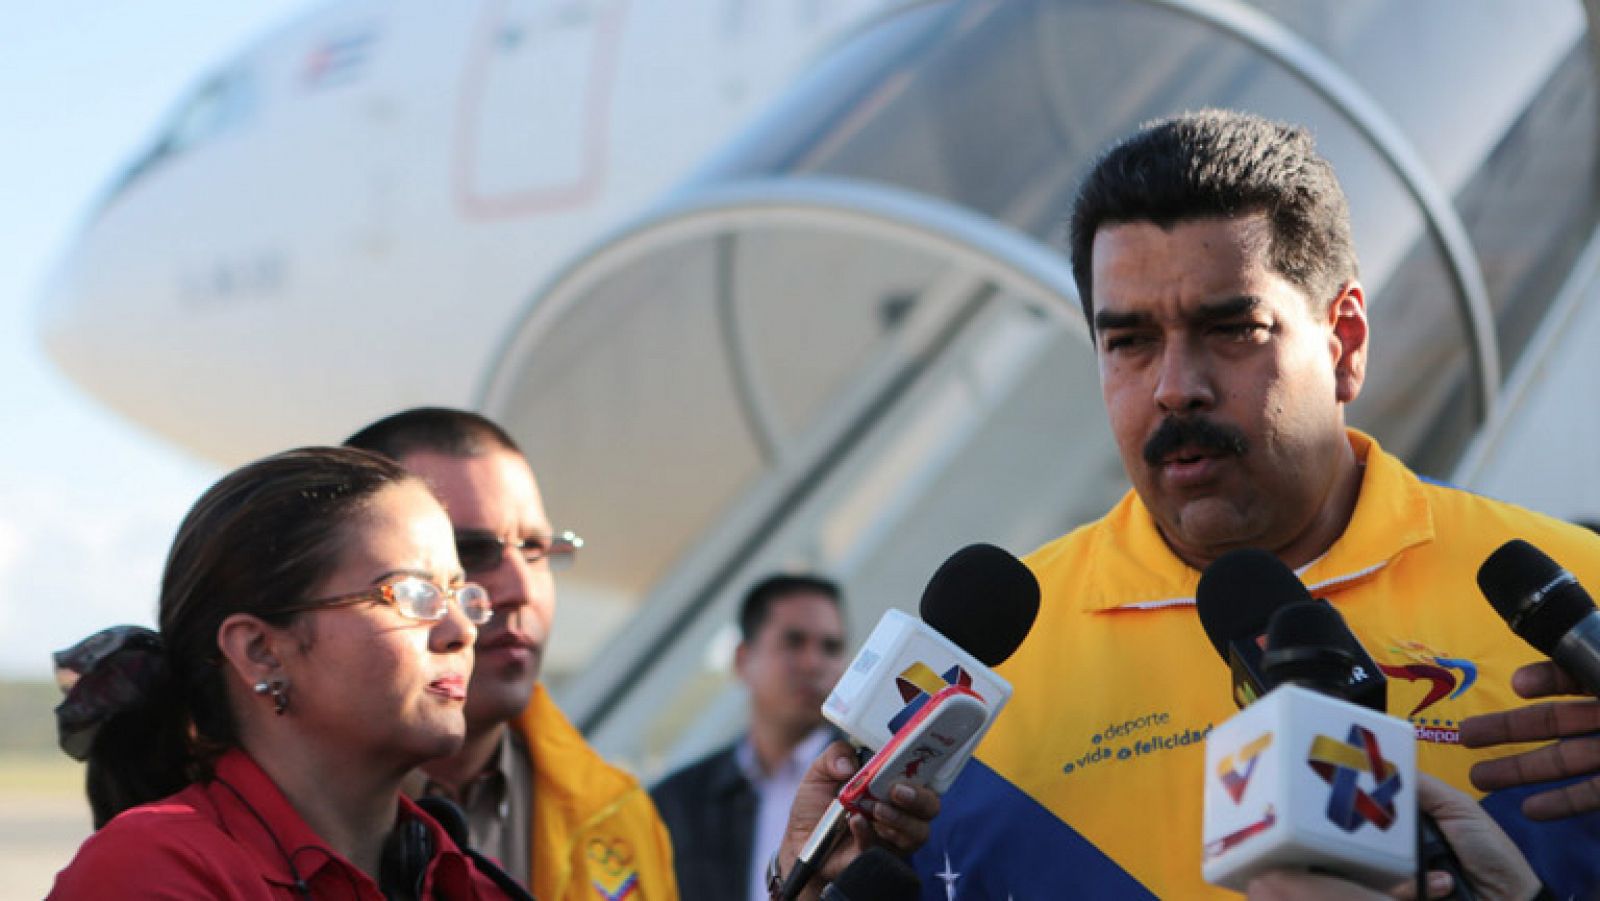 Telediario 1: Maduro: "Infame" el trato a Morales | RTVE Play